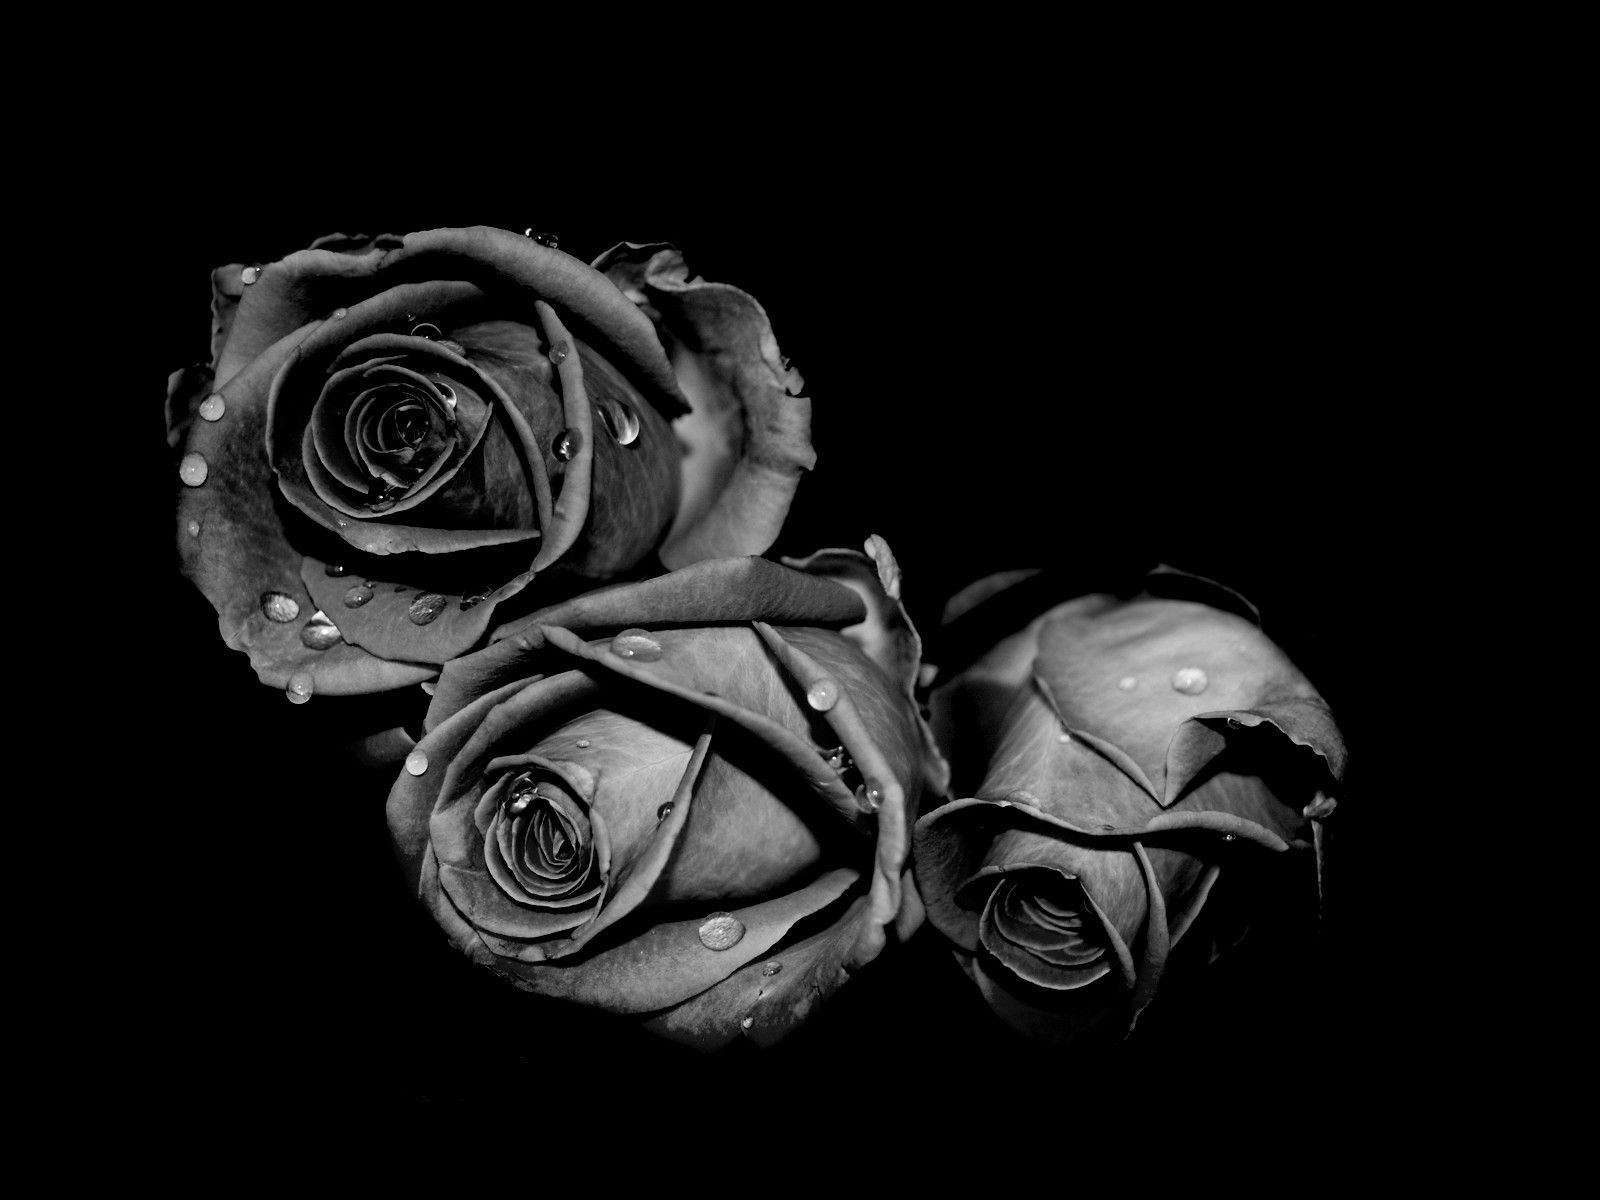 Wallpaper Of Black Roses